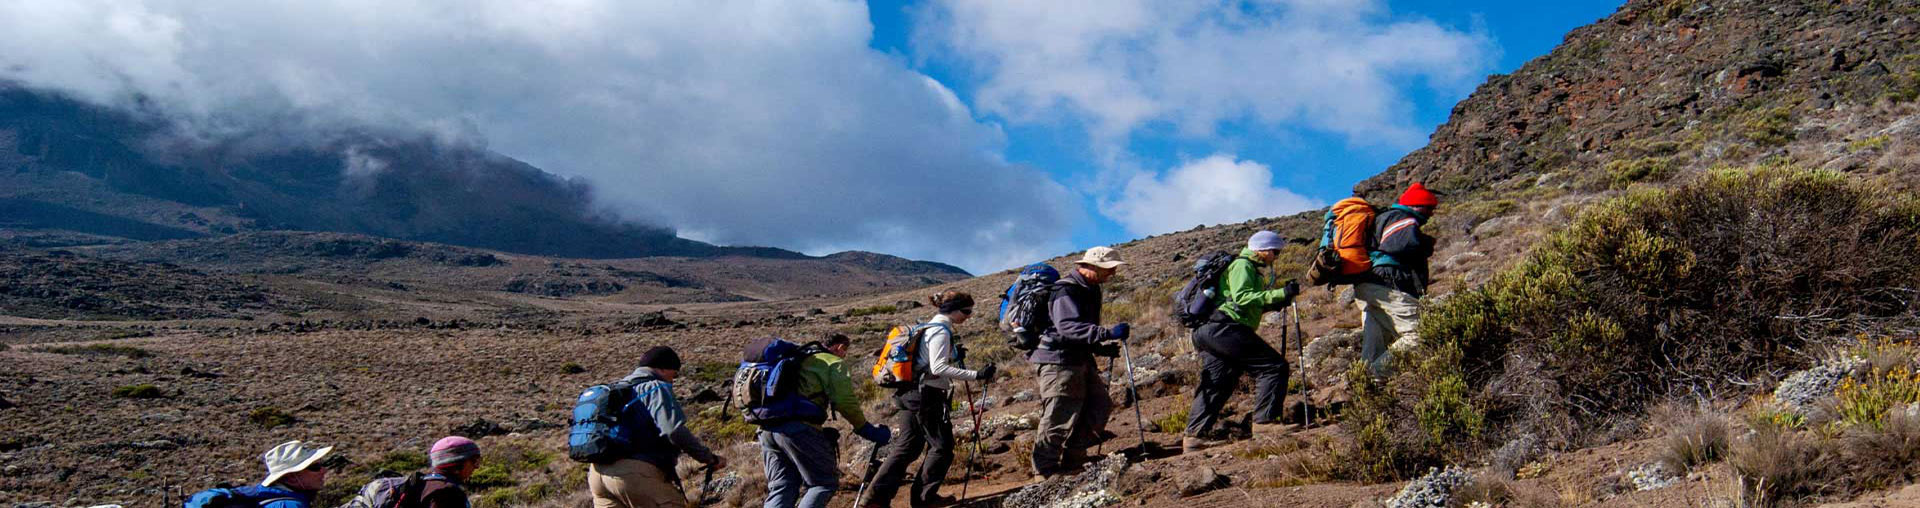 Kilimanjaro Trekking Tour Package From India